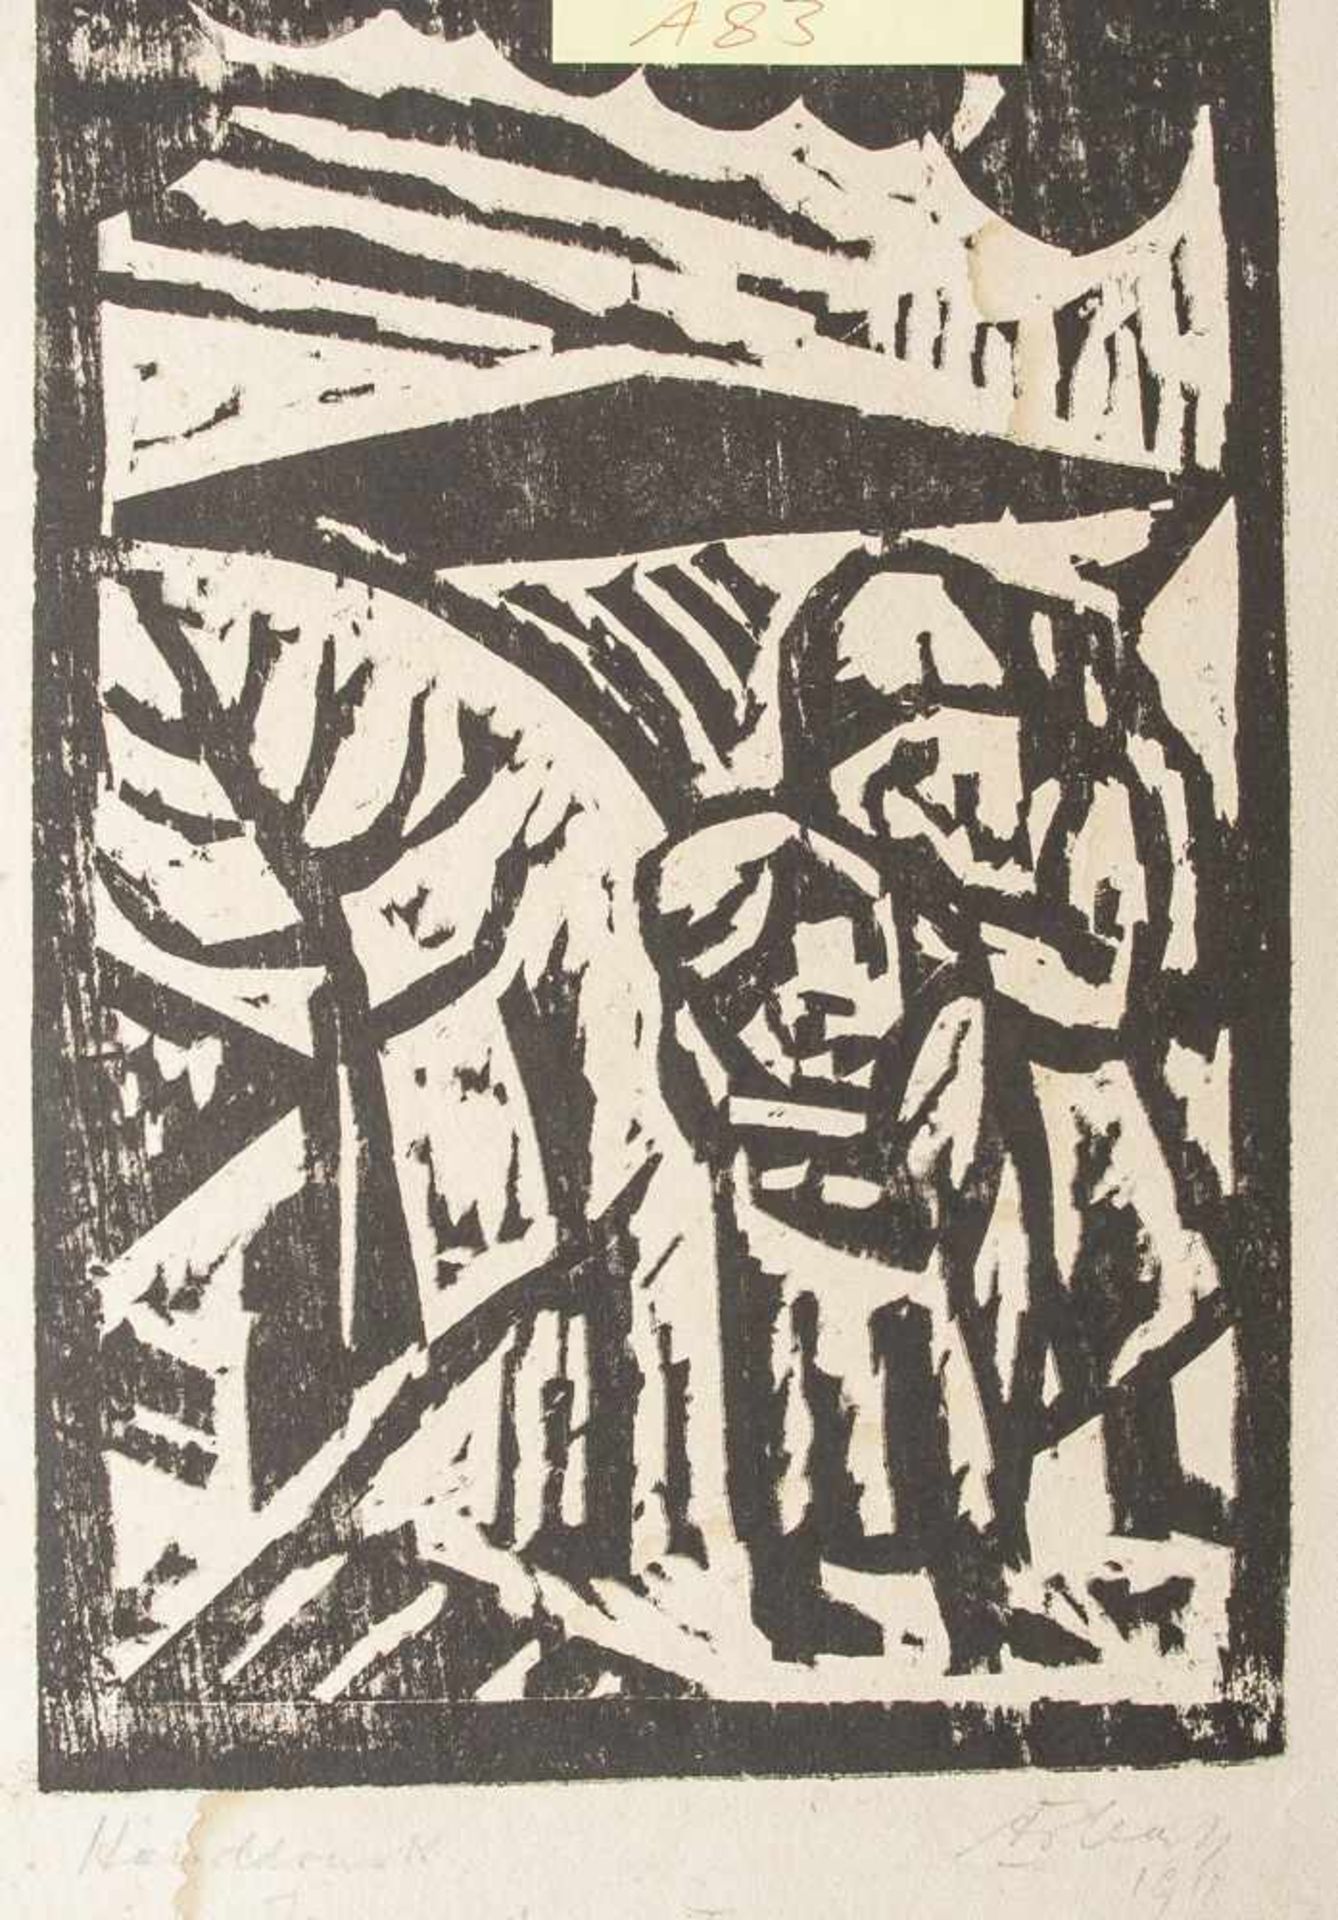 Erbach, Alois (1888-1972), "Kalter Tag", Holzschnitt, re. u. sign. u. dat. 1918, mittigbez., li.